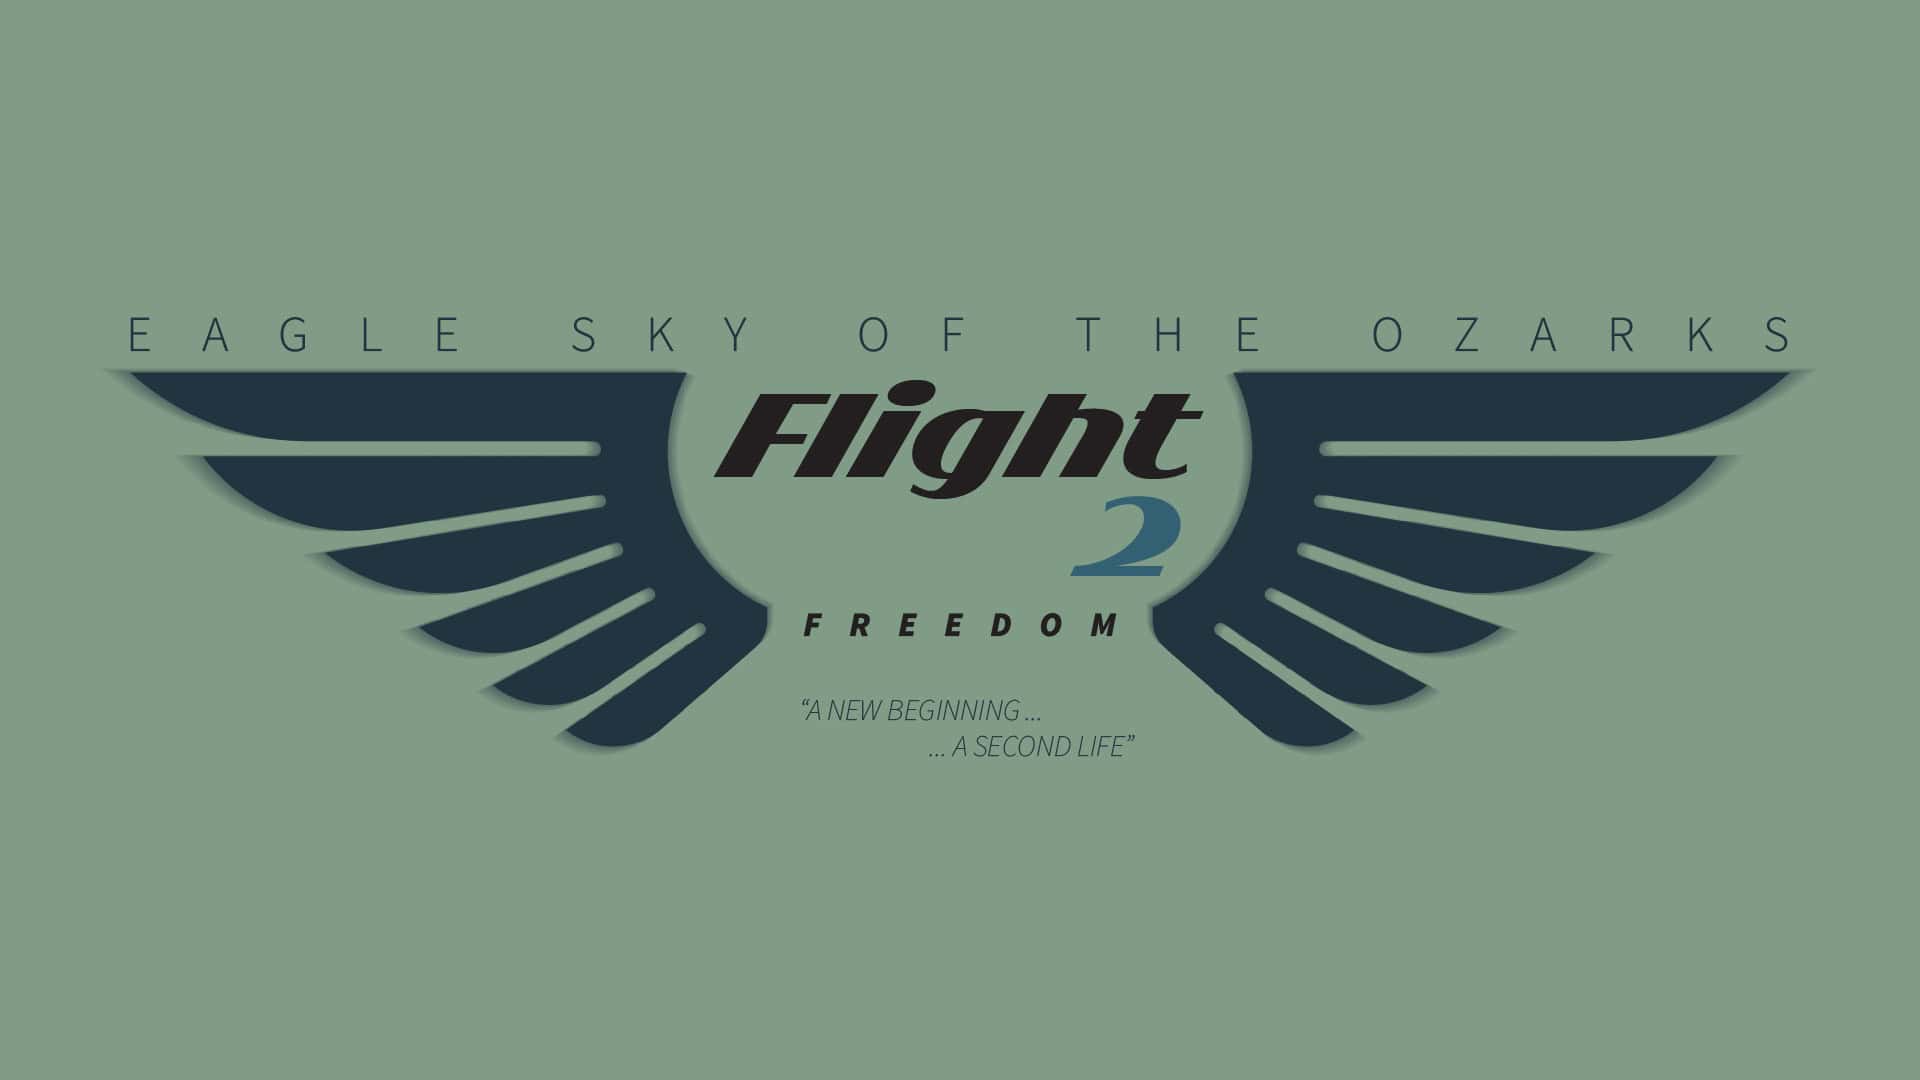 Eagle Sky of The Ozarks - Flight 2 Freedom